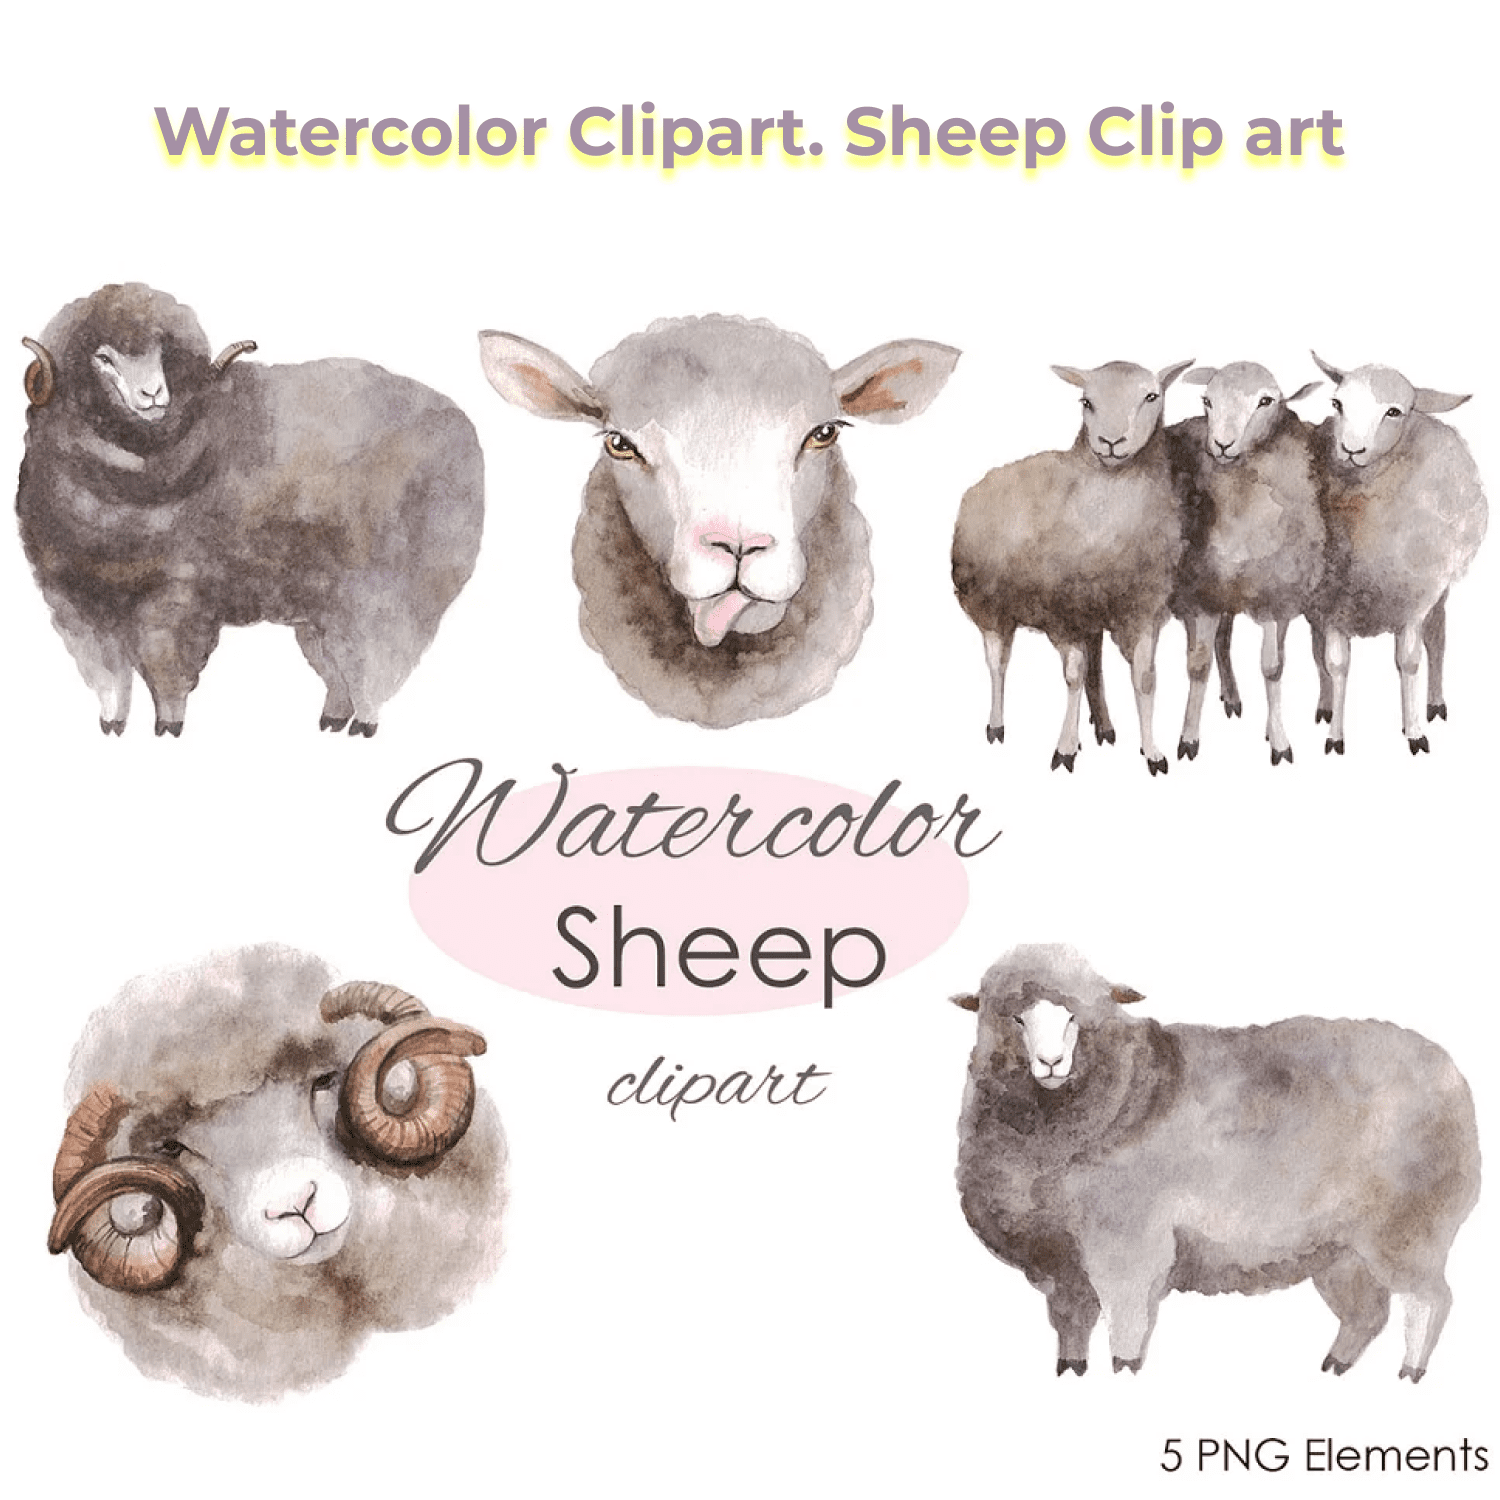 Watercolor Clipart. Sheep Clip art cover.